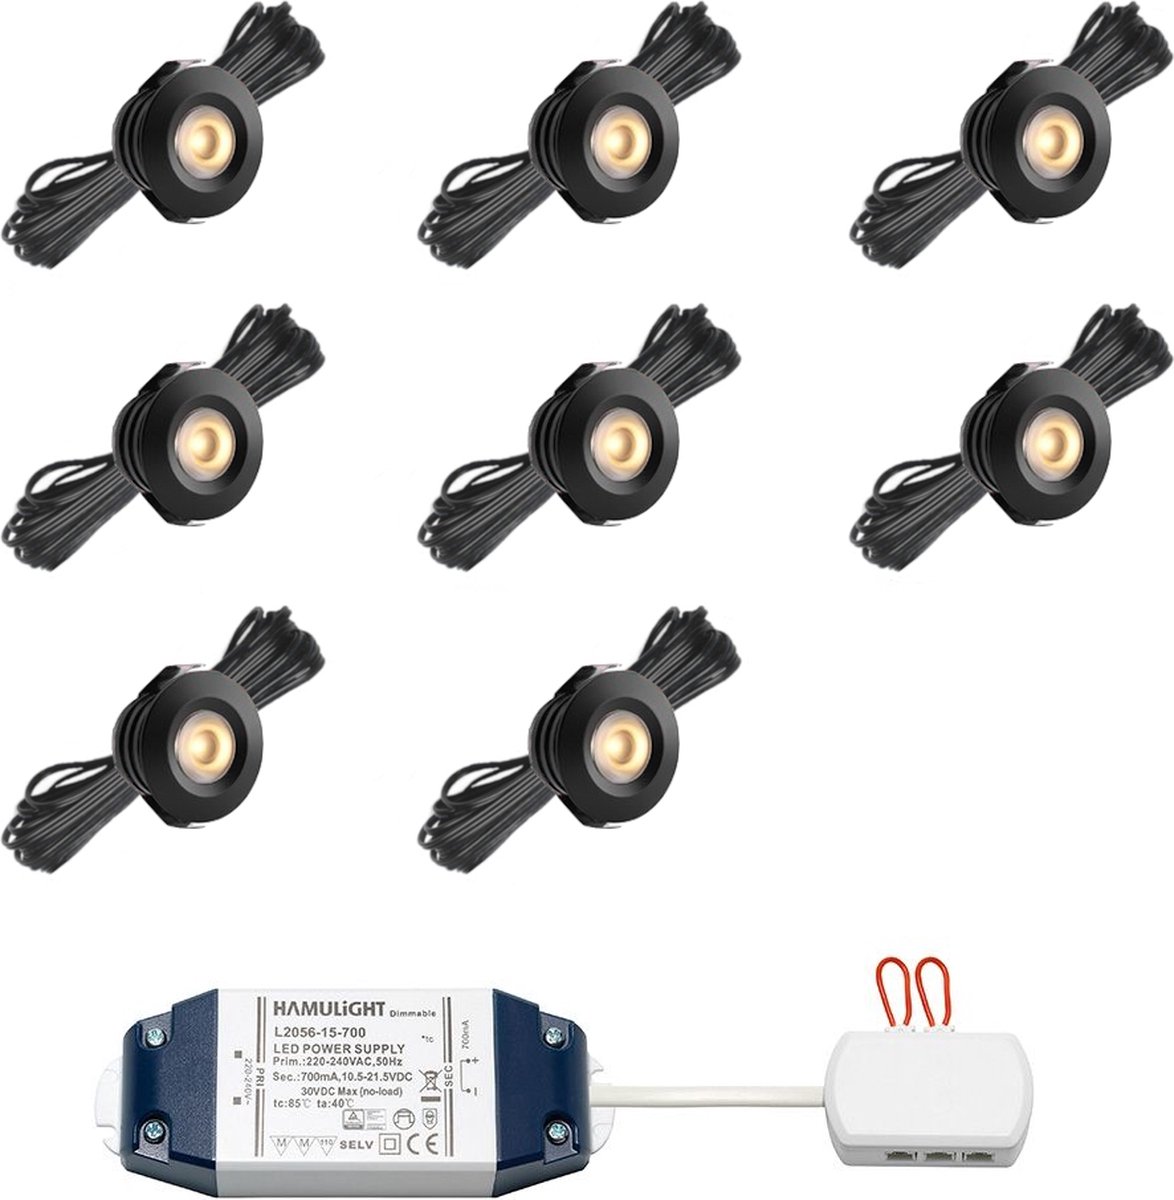 LED inbouwspot Pals bas zwart - inclusief trafo - inbouwspots / downlights / plafondspots / led spot / 3W / dimbaar / warm wit / rond / 230V / IP44 / - set van 8 stuks